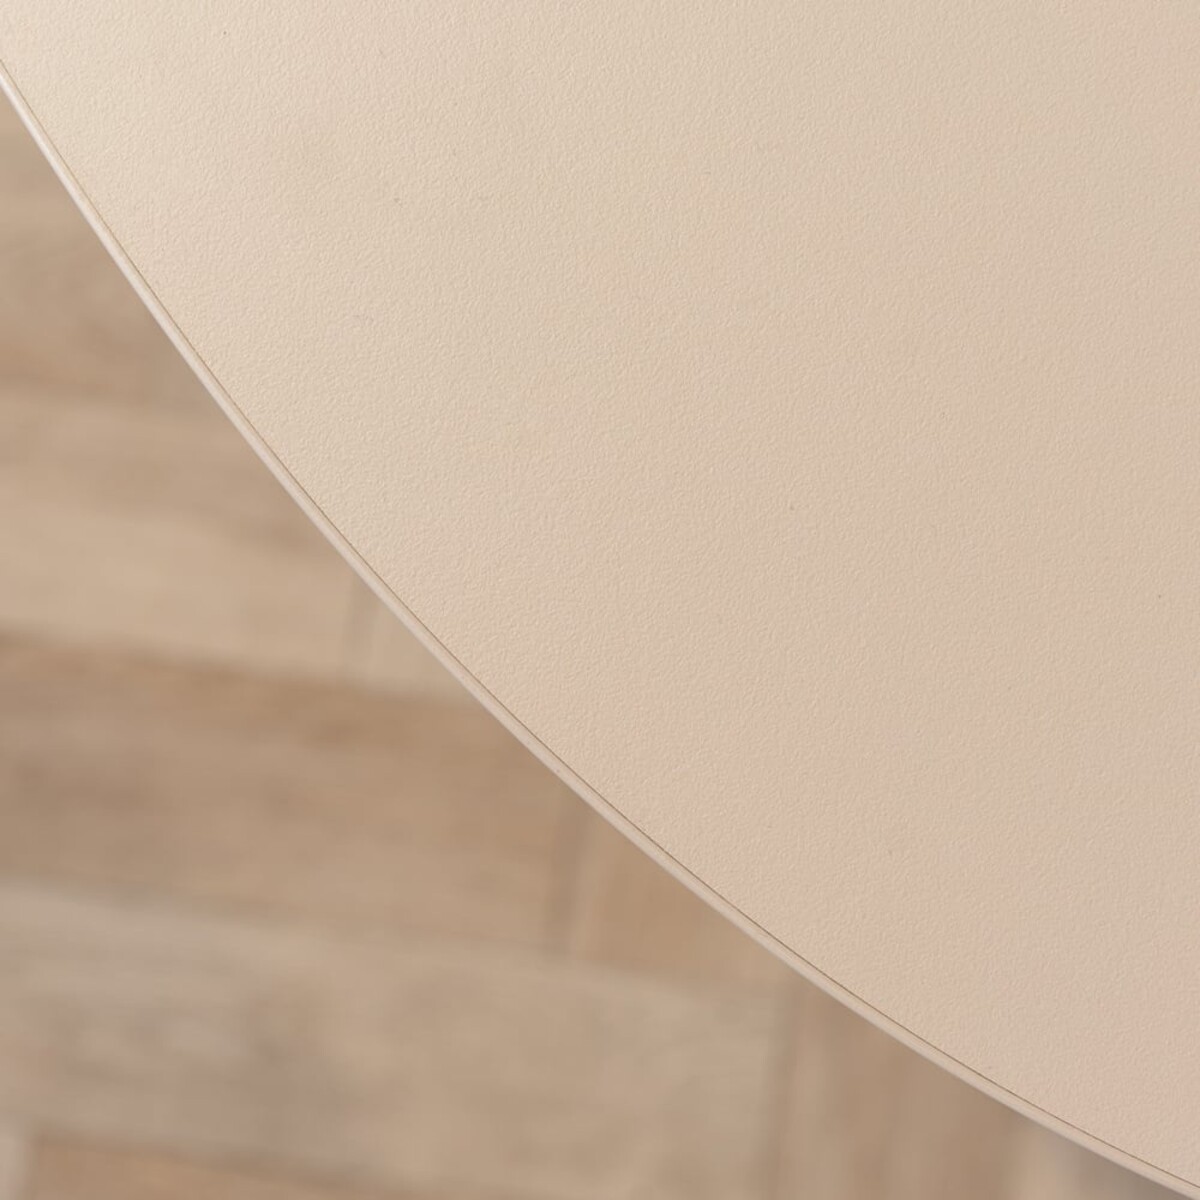 Table à manger ovale beige melamine Dio 270 x 130 cm